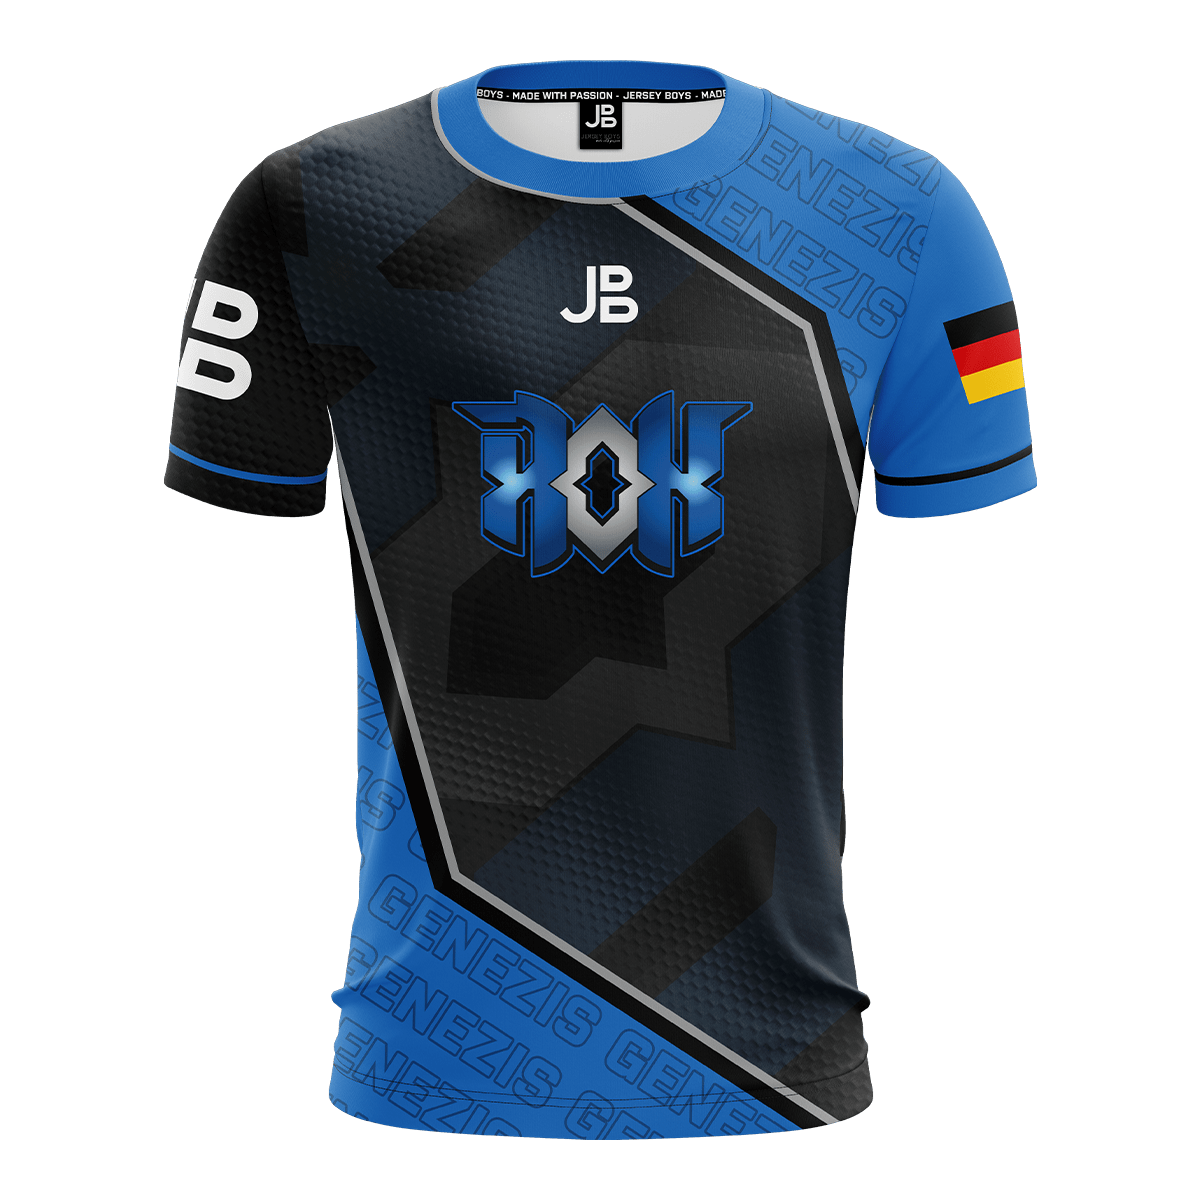 IROX - Jersey 2020 BLUE